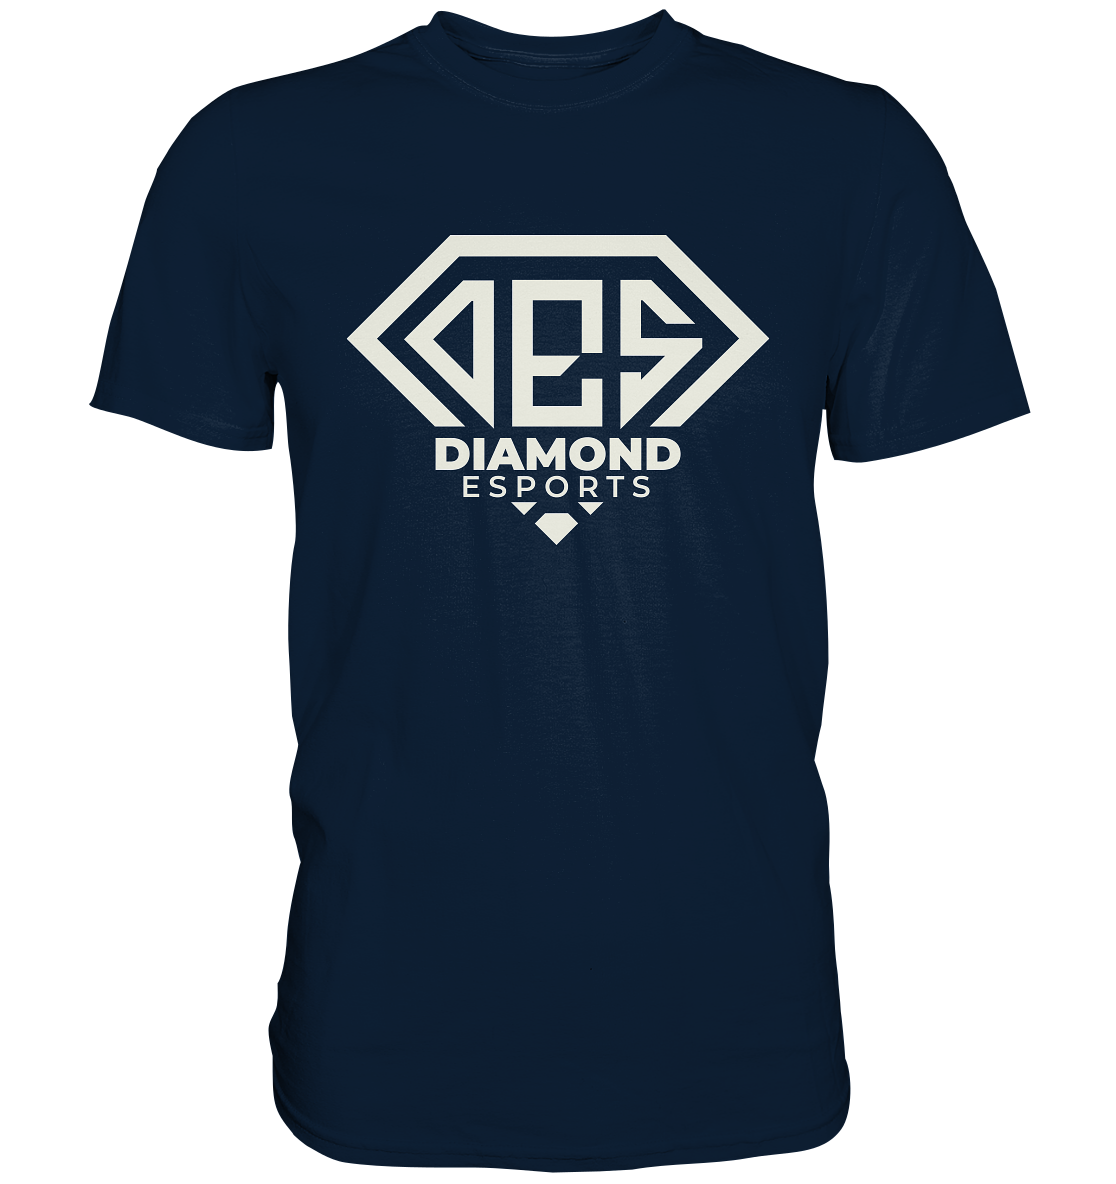 DIAMOND ESPORTS - Basic Shirt